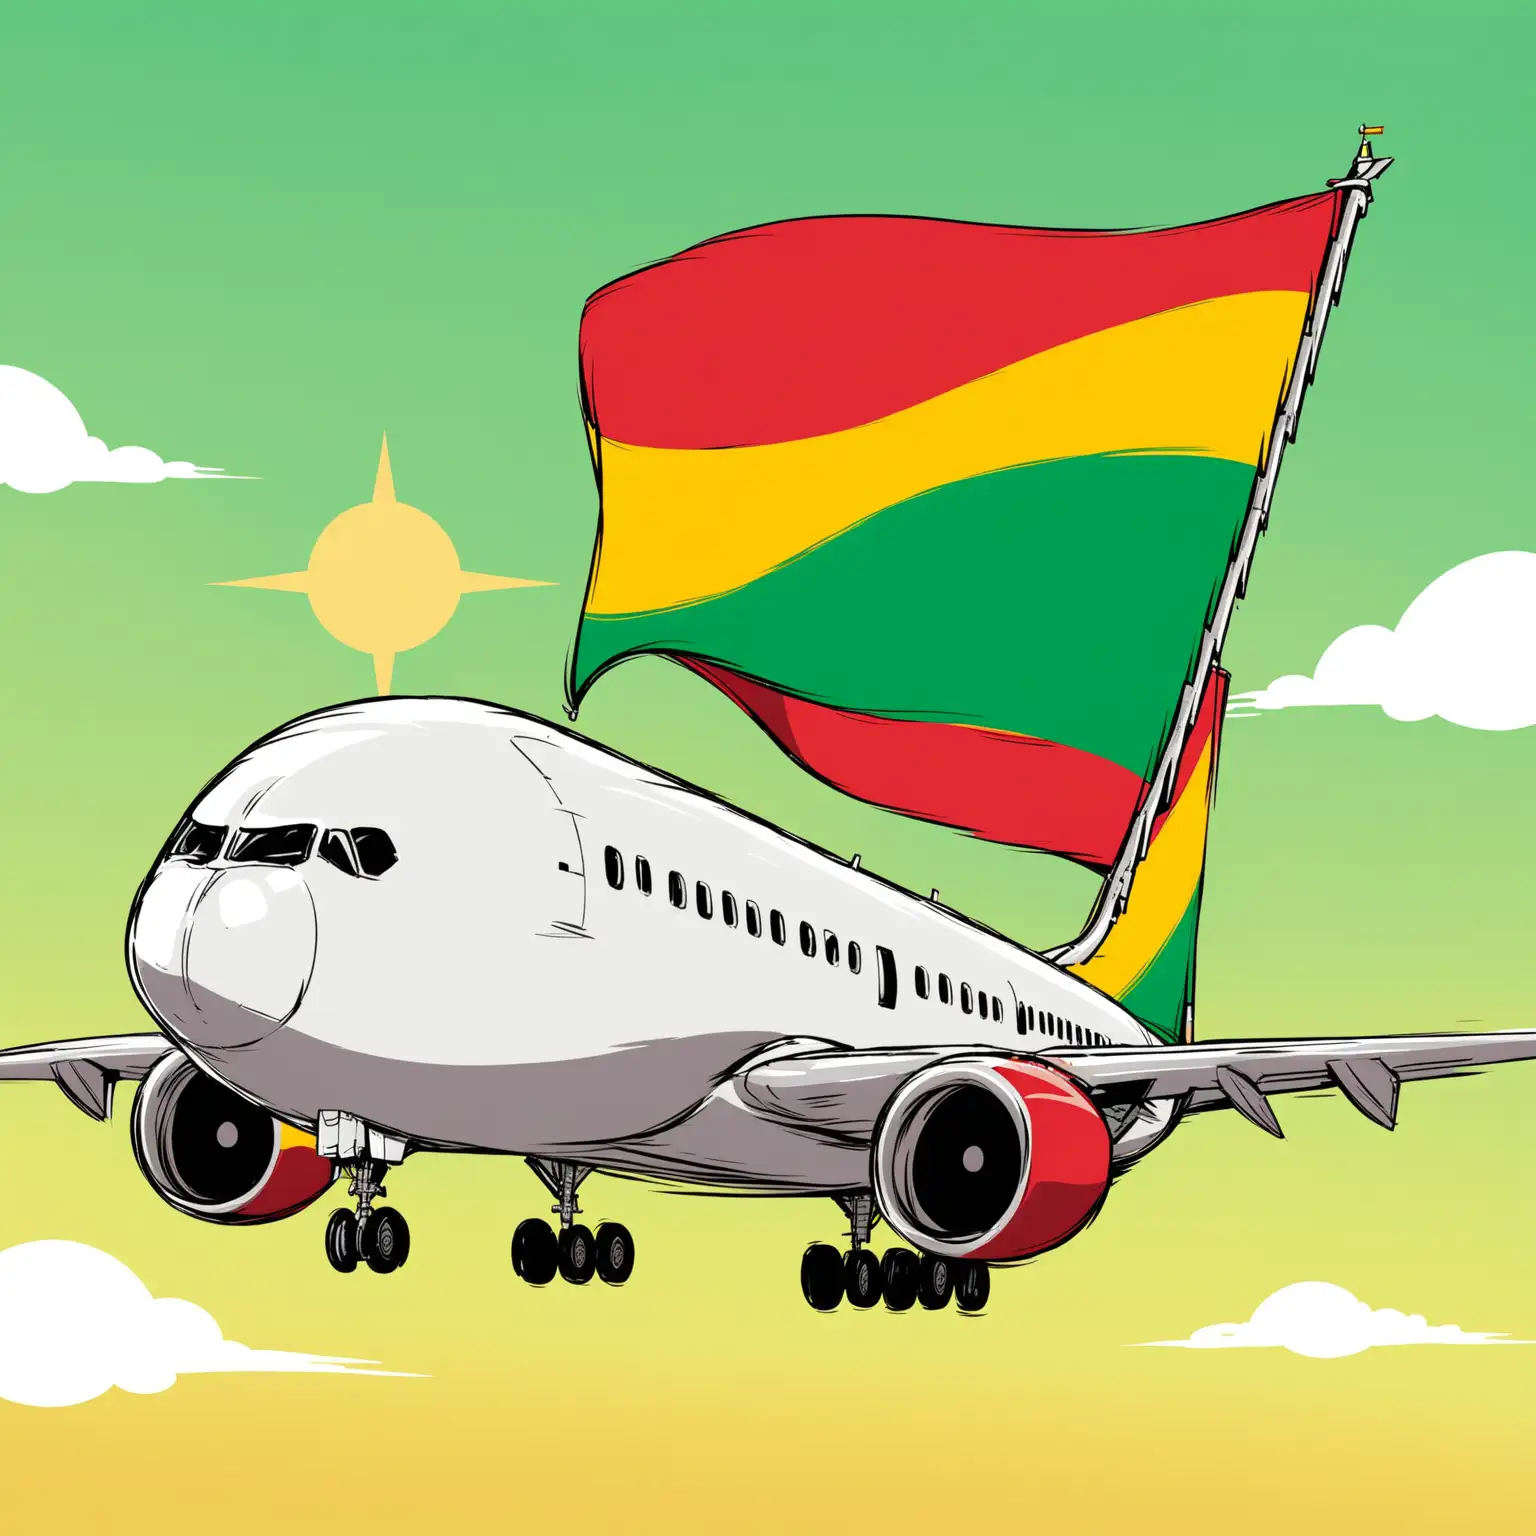 Illustrate an image of big ethiopian flag on a aeroplane .Cartoon version.